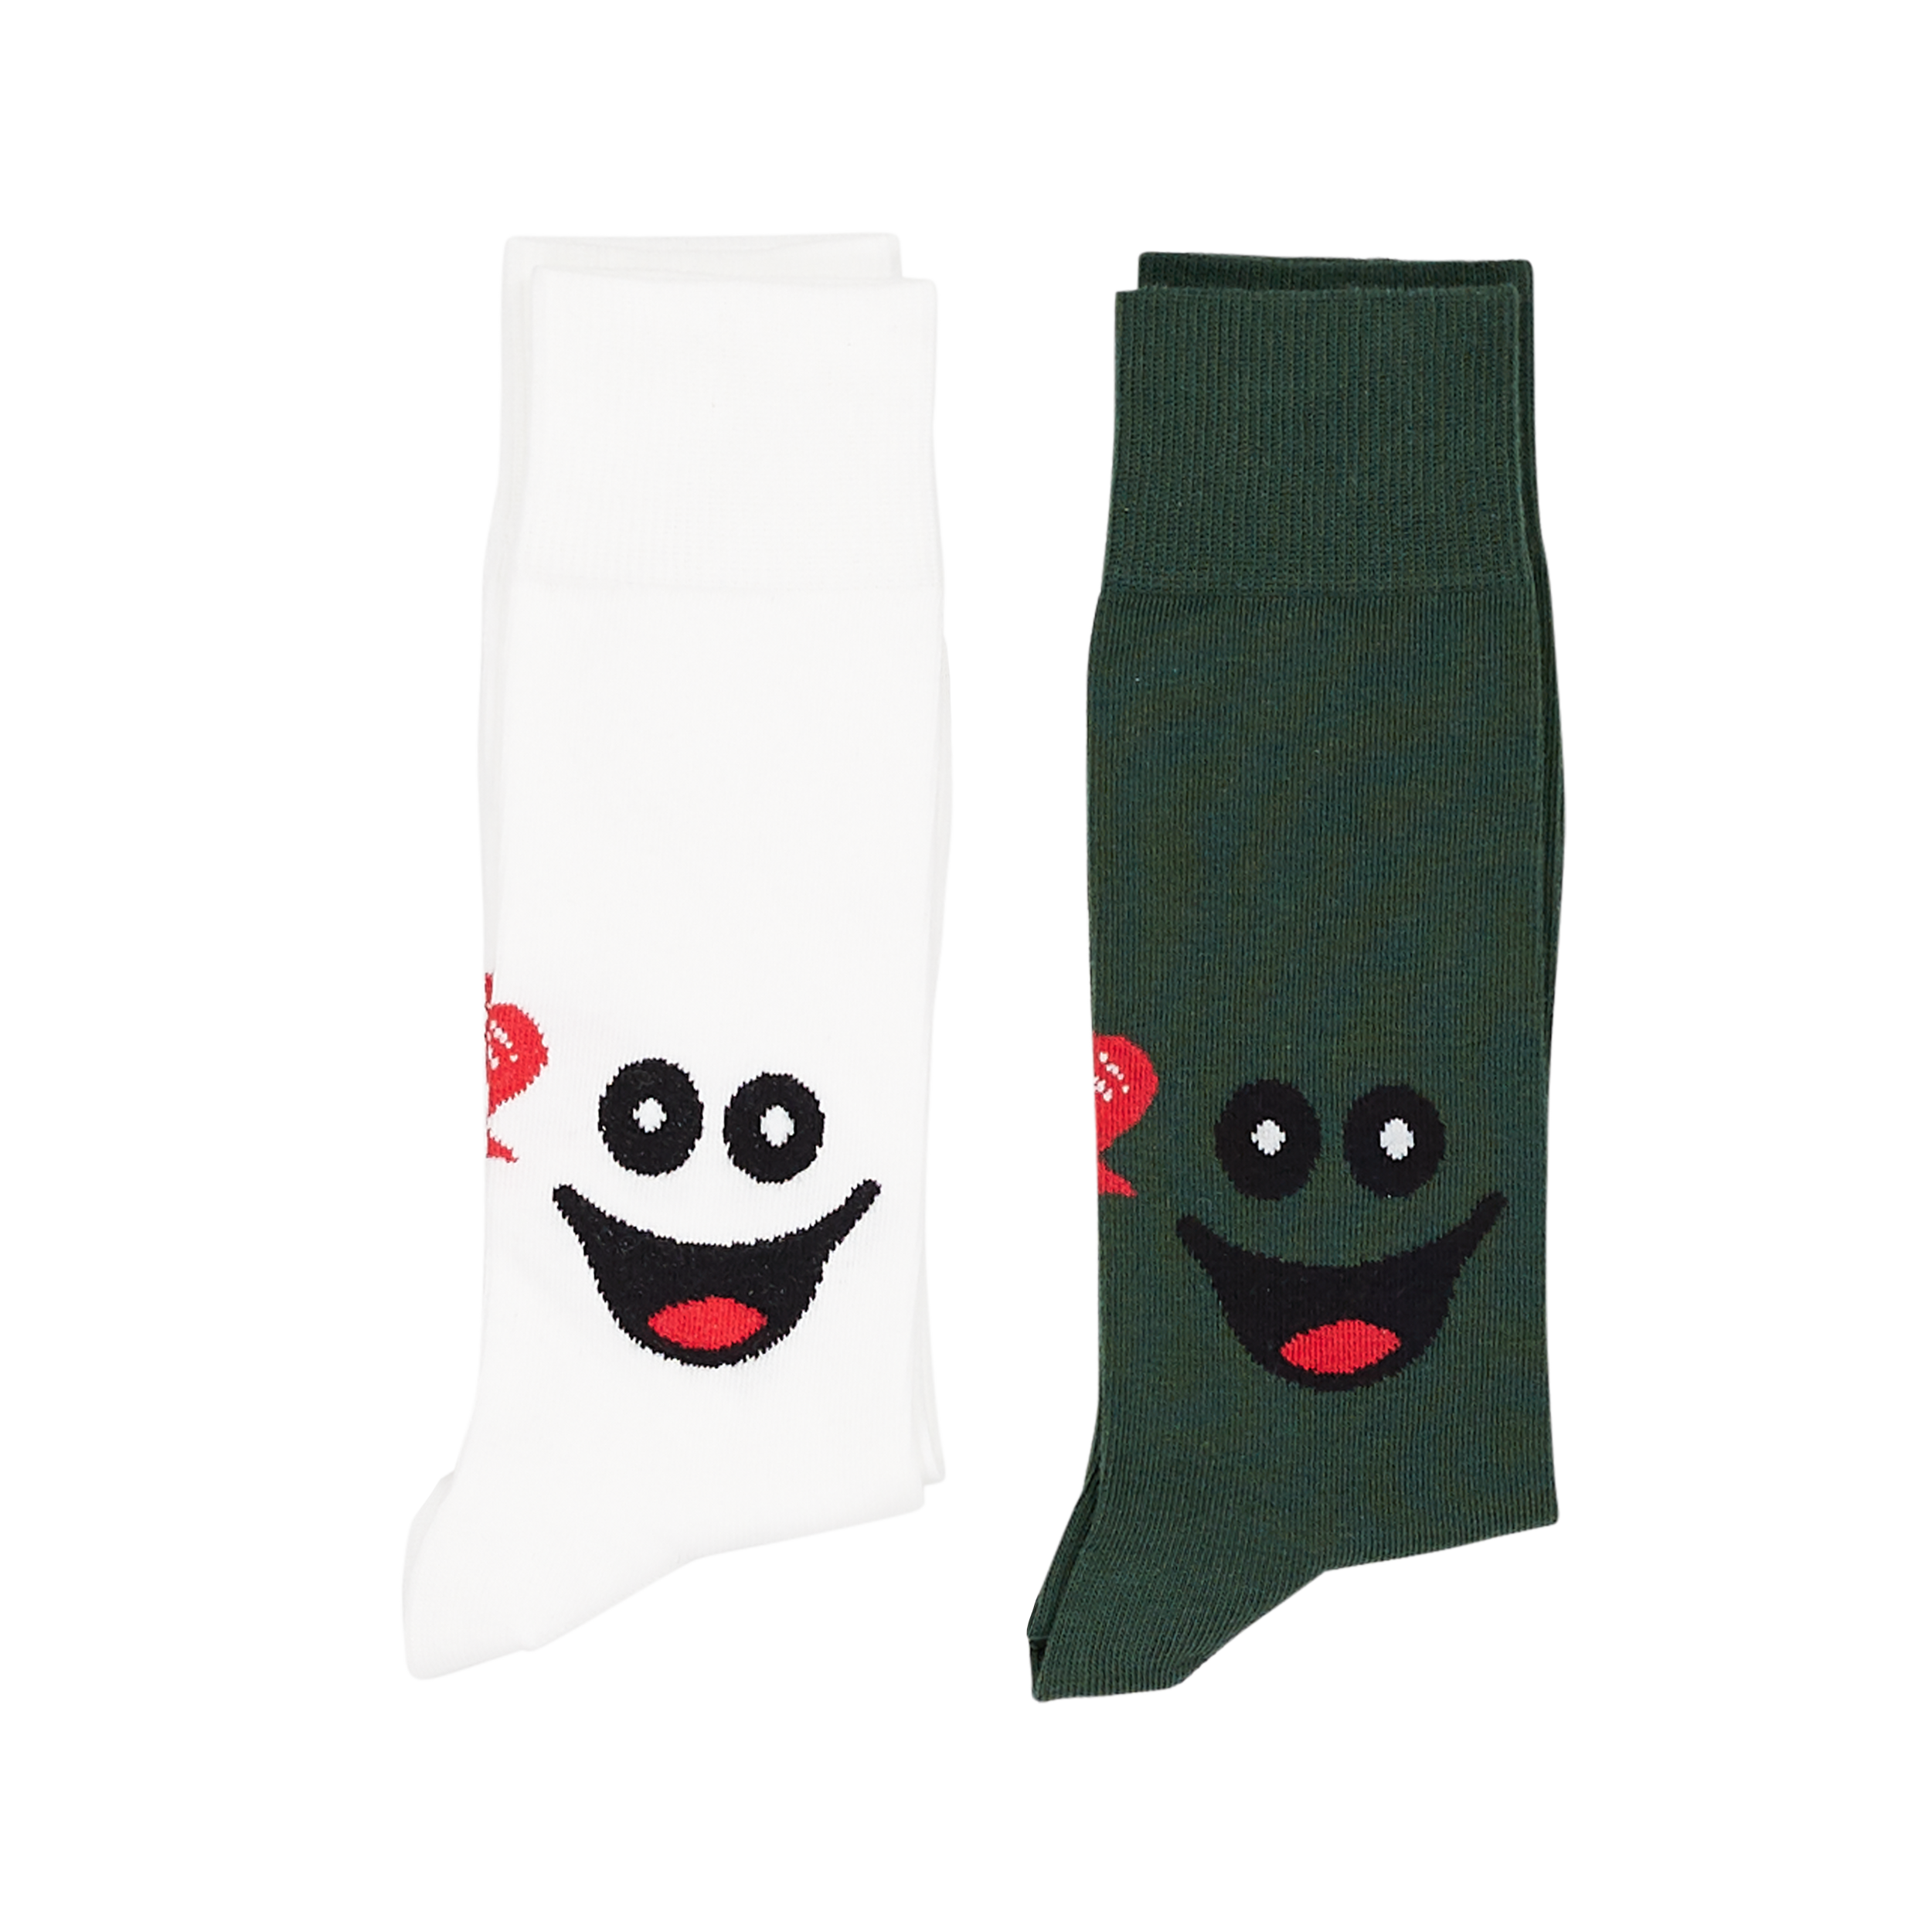 Cheer Smiley two pack of socks